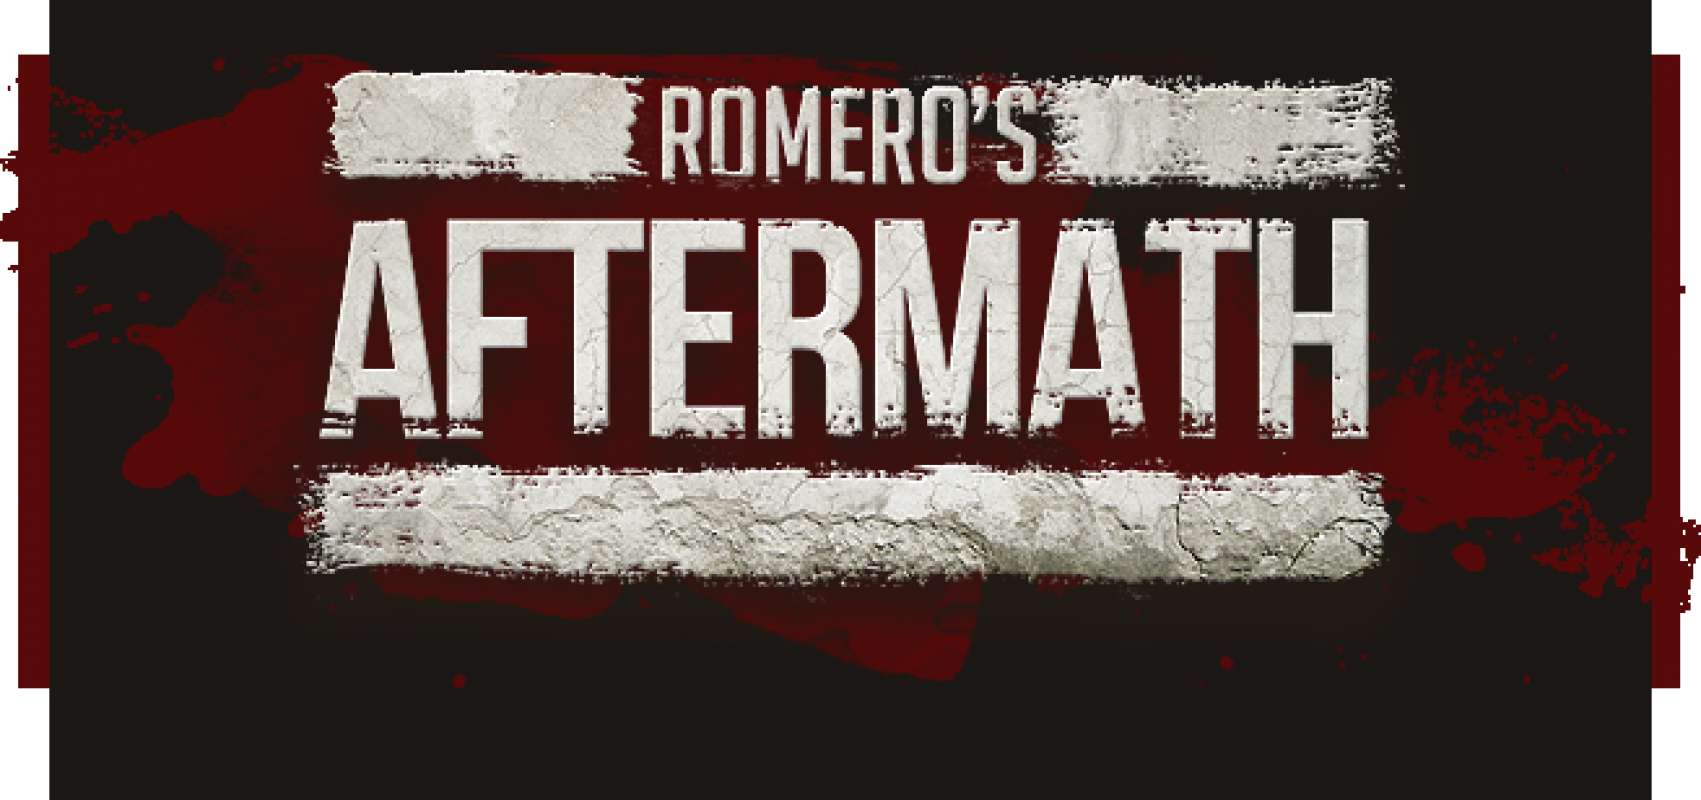 Aftermath перевод. Romero s Aftermath. Romero's Aftermath фон. Aftermath Entertainment лого. Crisis Aftermath телепередача.